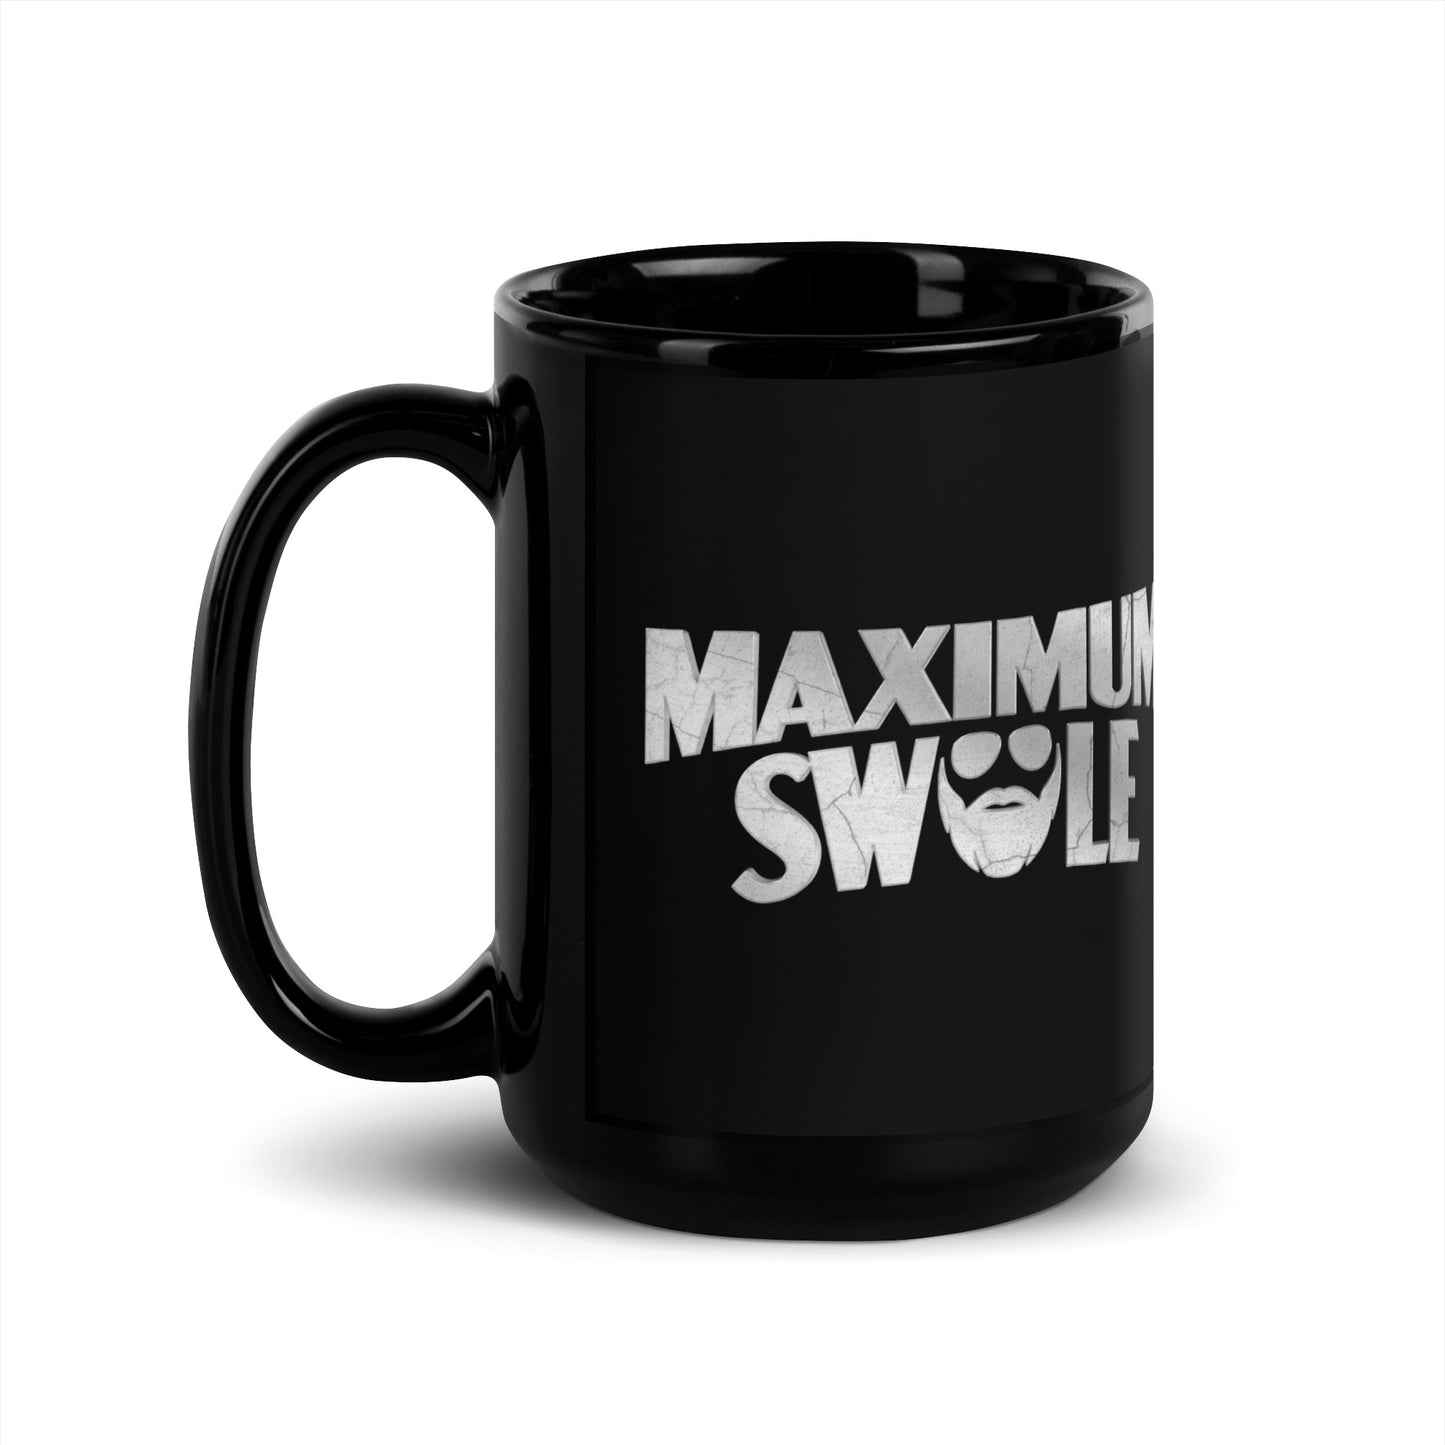 Maximum Swole Mug